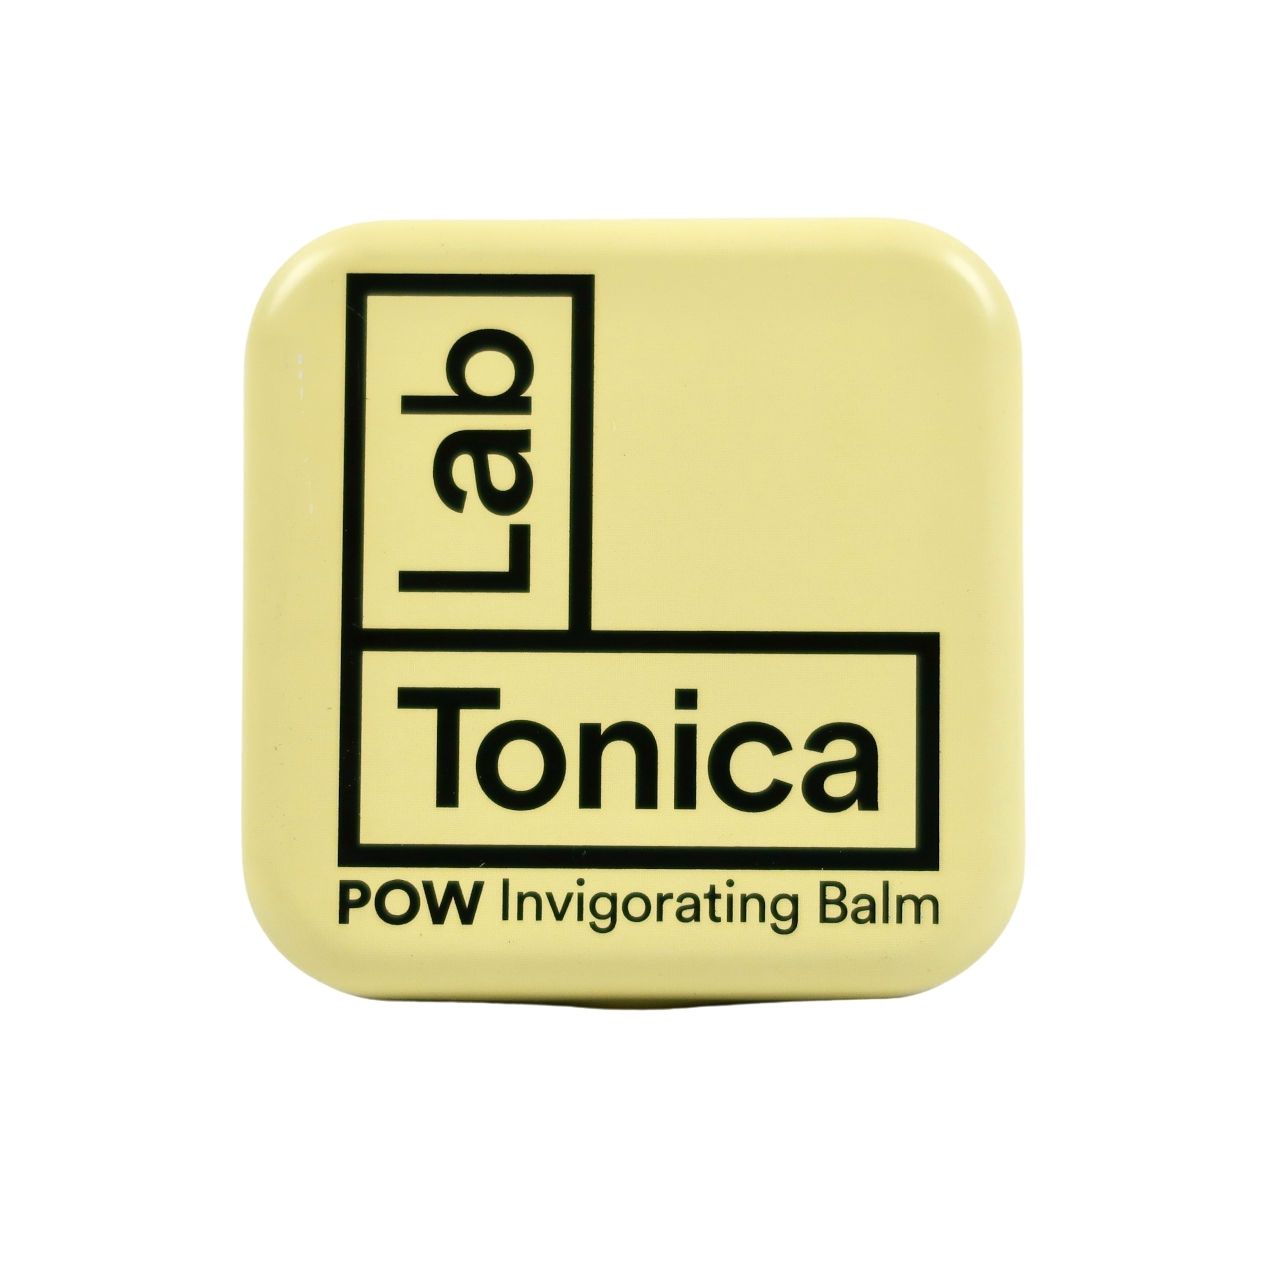 Lab Tonica Aromatherapy Balm - POW